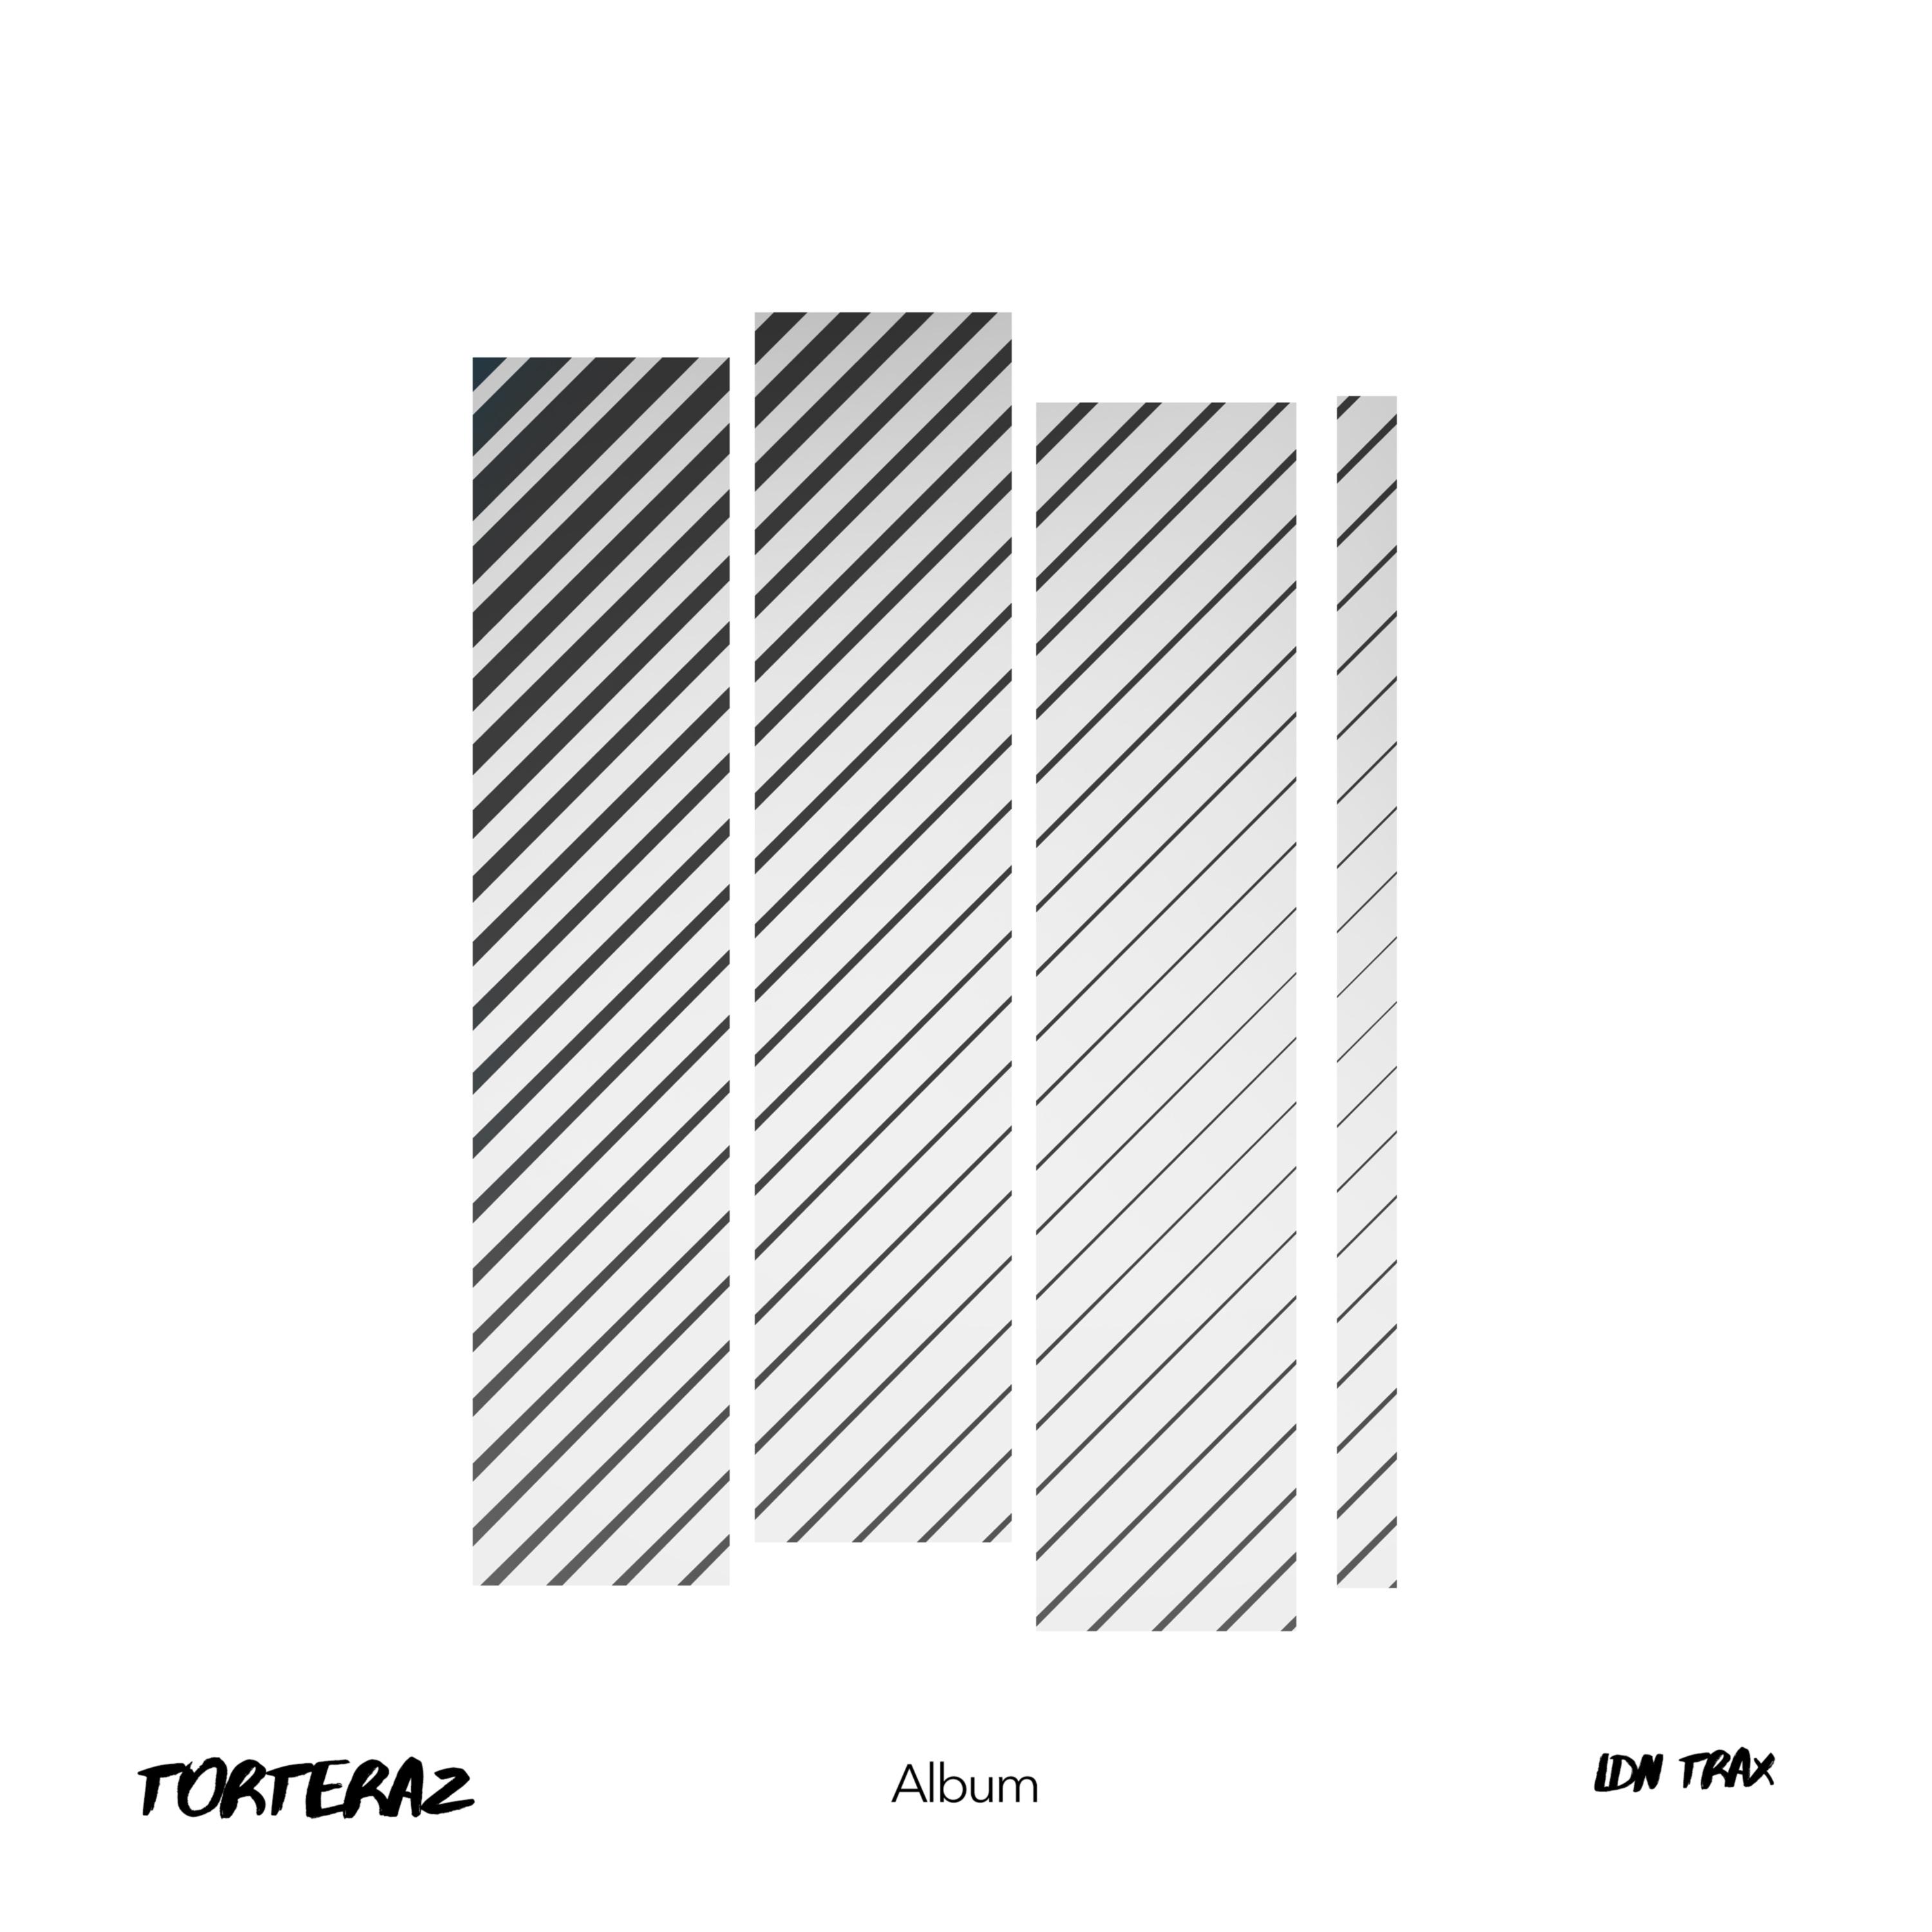 Torteraz - Avatar (Dj Tool Sub Phatty Mix)